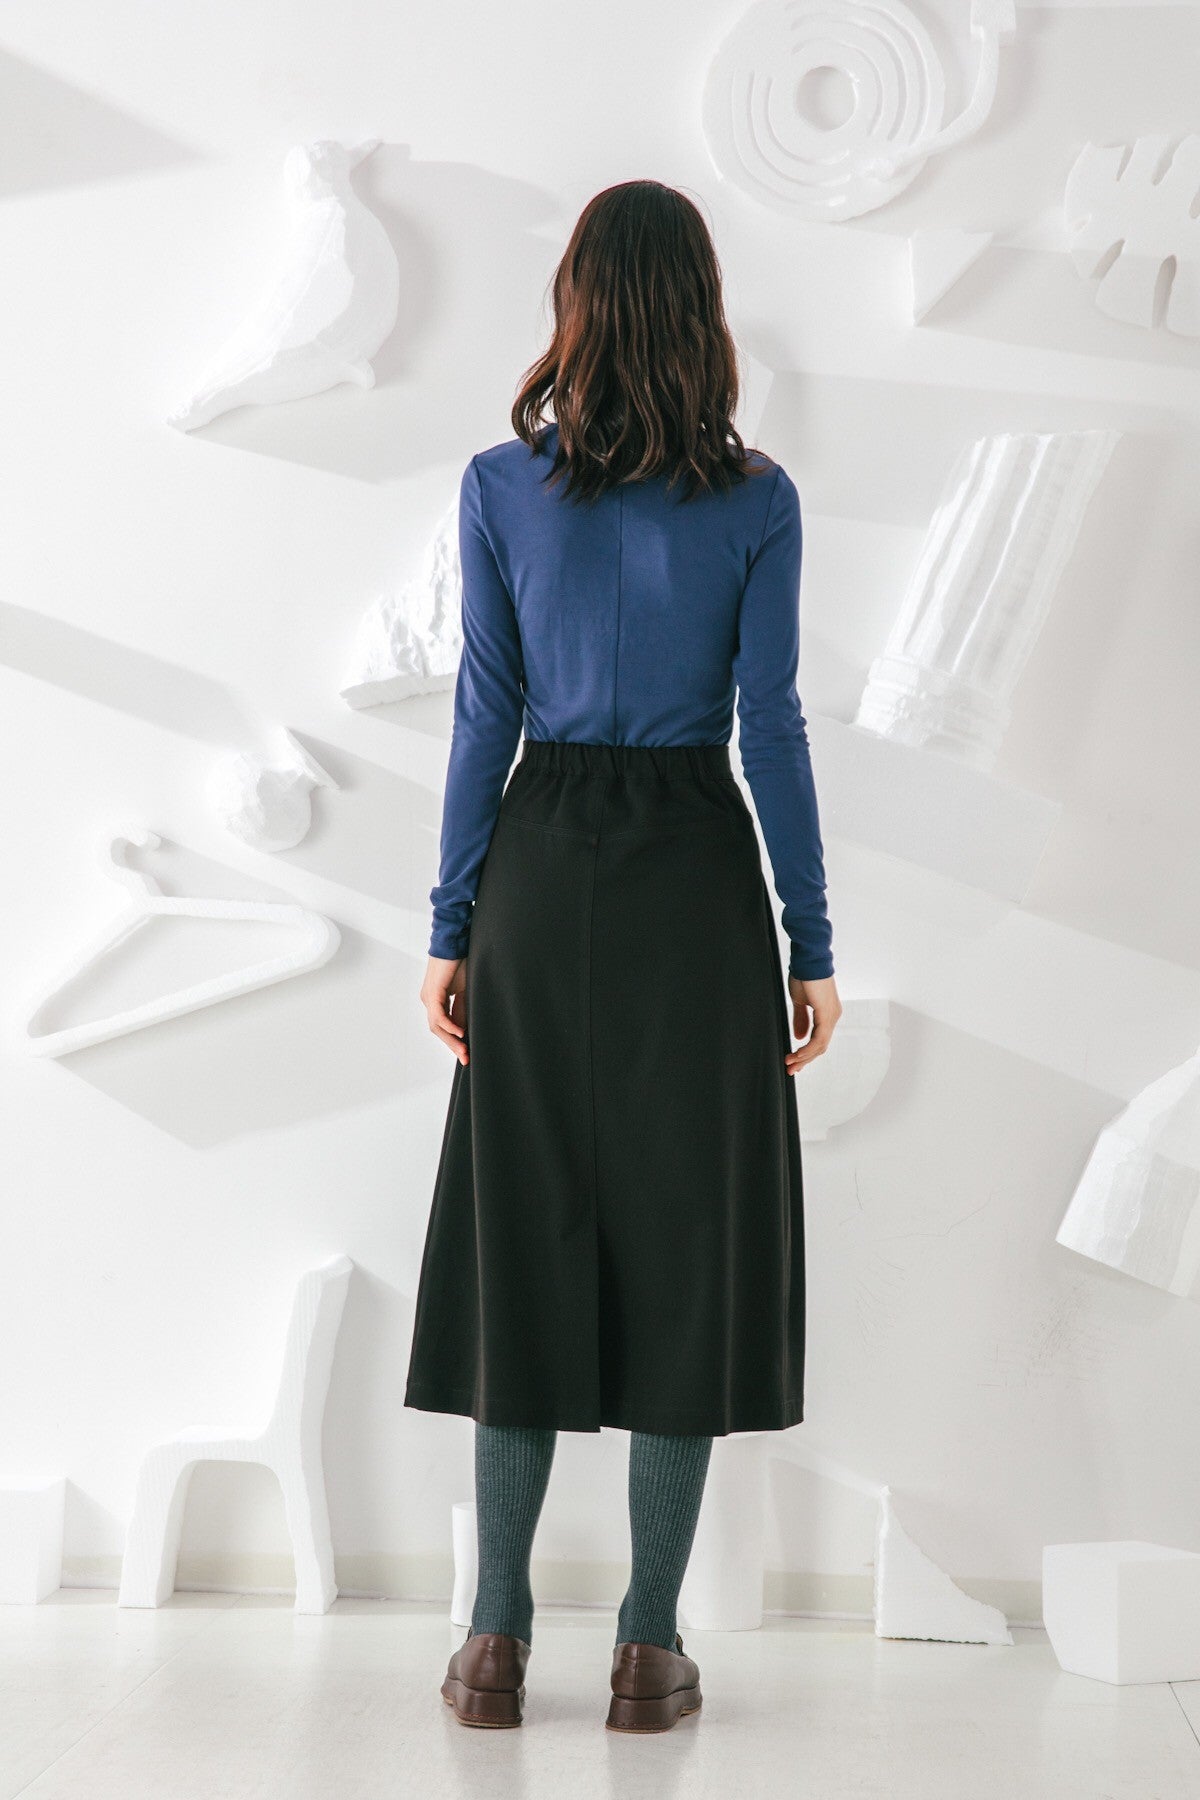 SKYE San Francisco SF shop ethical sustainable modern minimalist elegant quality women clothing fashion brand Aurelie Midi Skirt Black 5